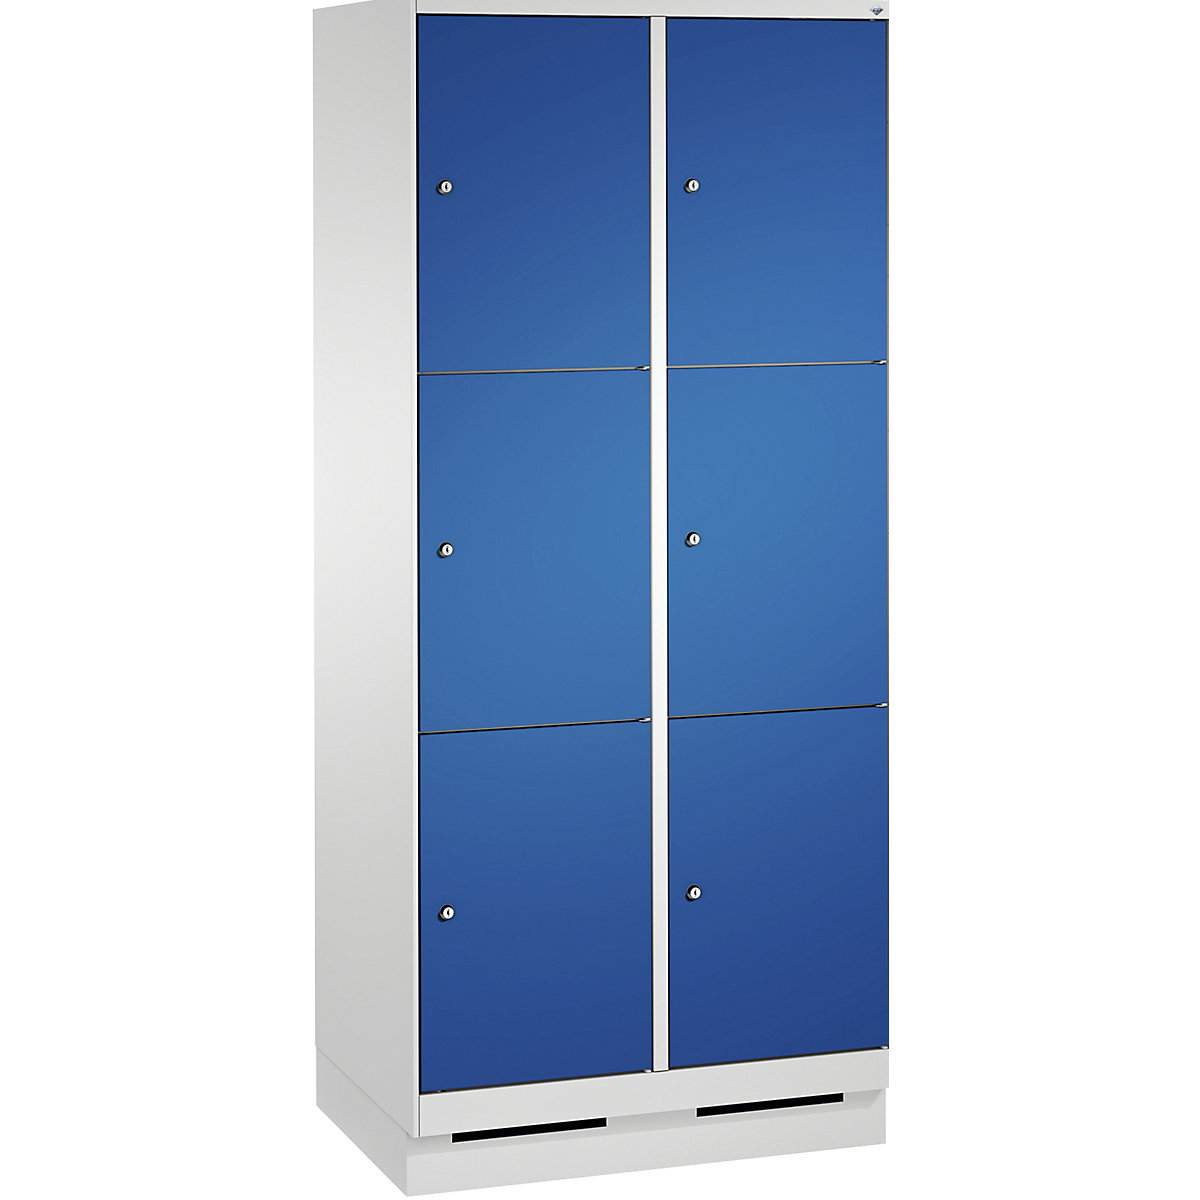 EVOLO locker unit, with plinth – C+P, 2 compartments, 3 shelf compartments each, compartment width 400 mm, light grey / gentian blue-12